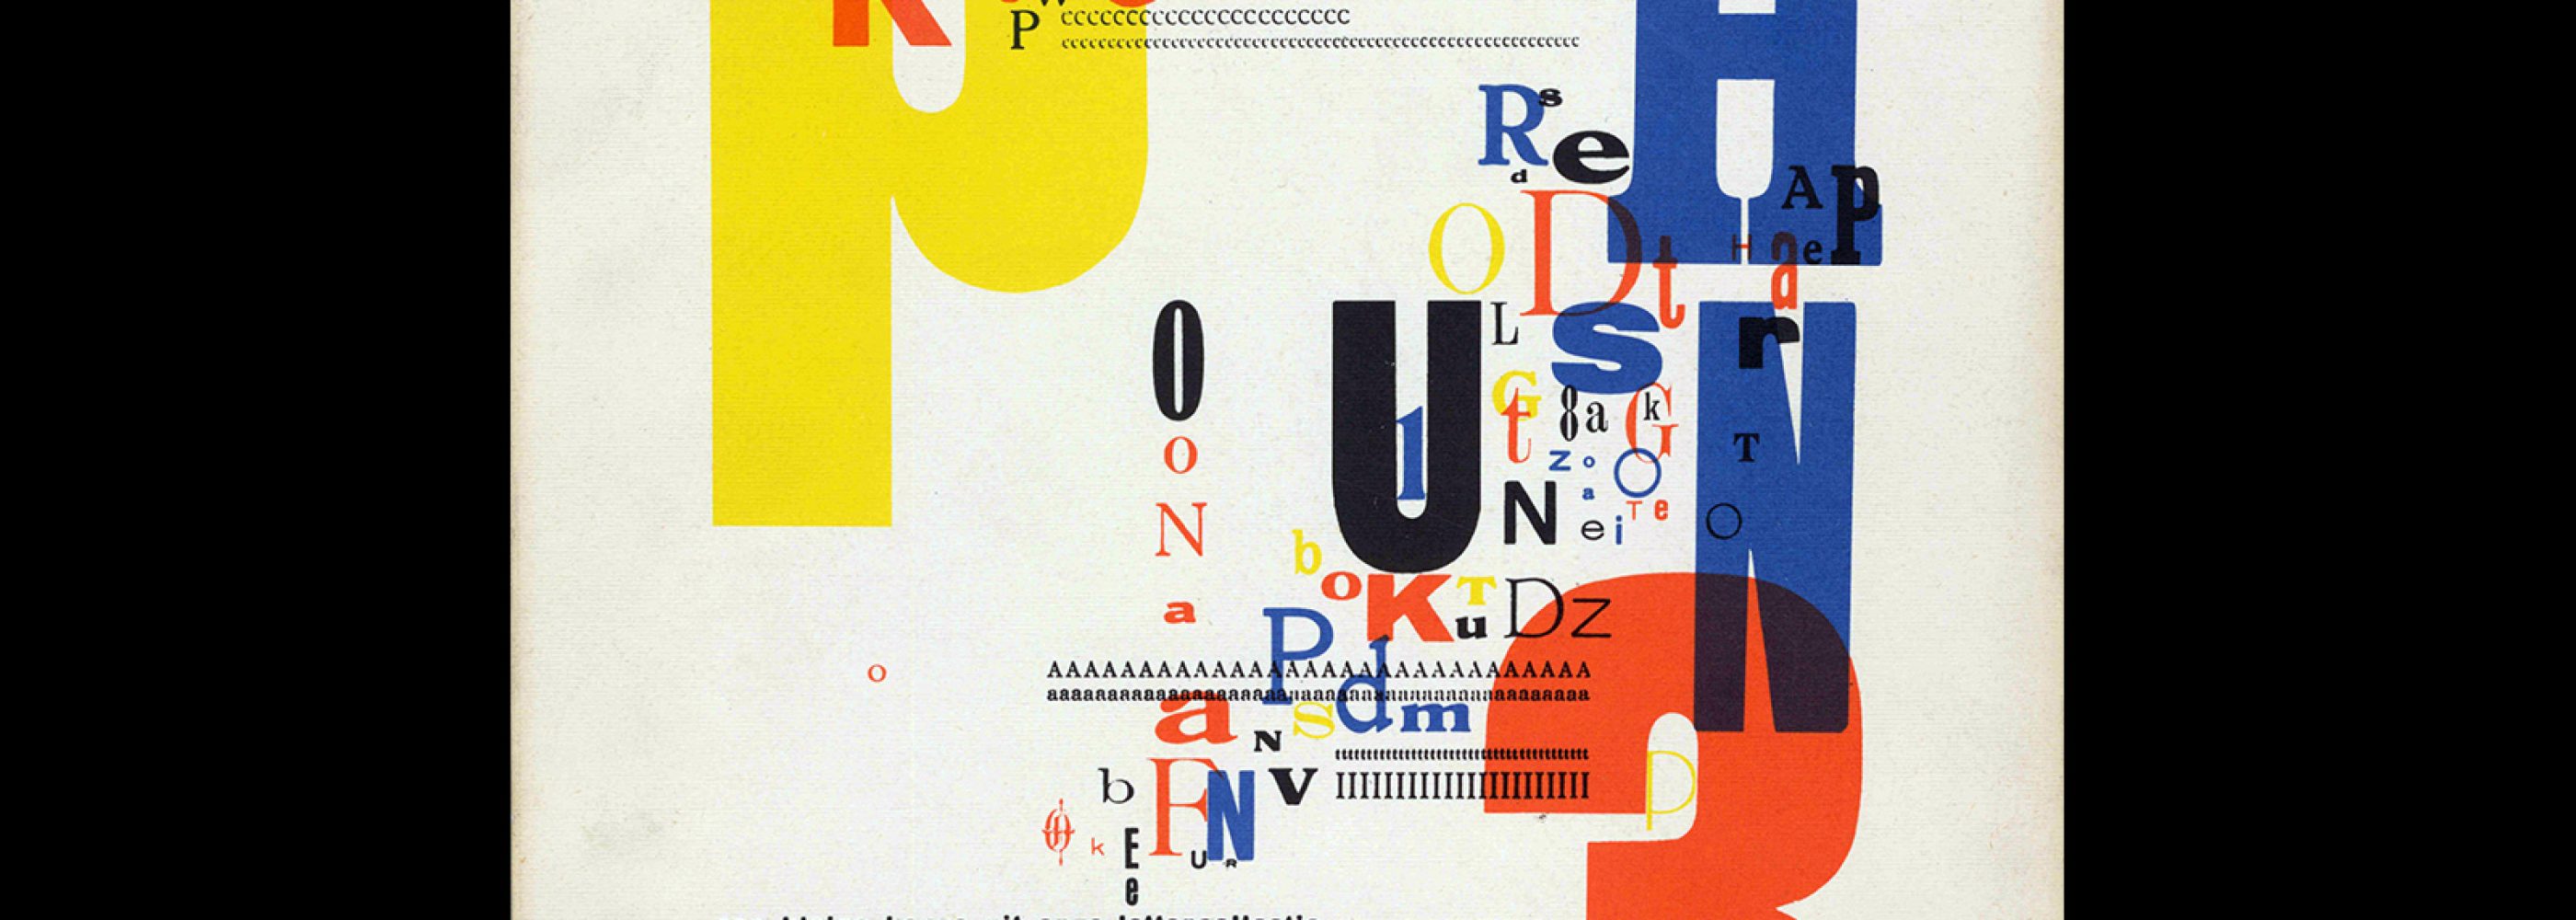 Rassegna 30: Piet Zwart: L'opera Tipografica 1923-1933 / Piet Zwart, the typographical work 1923-1933, 1987